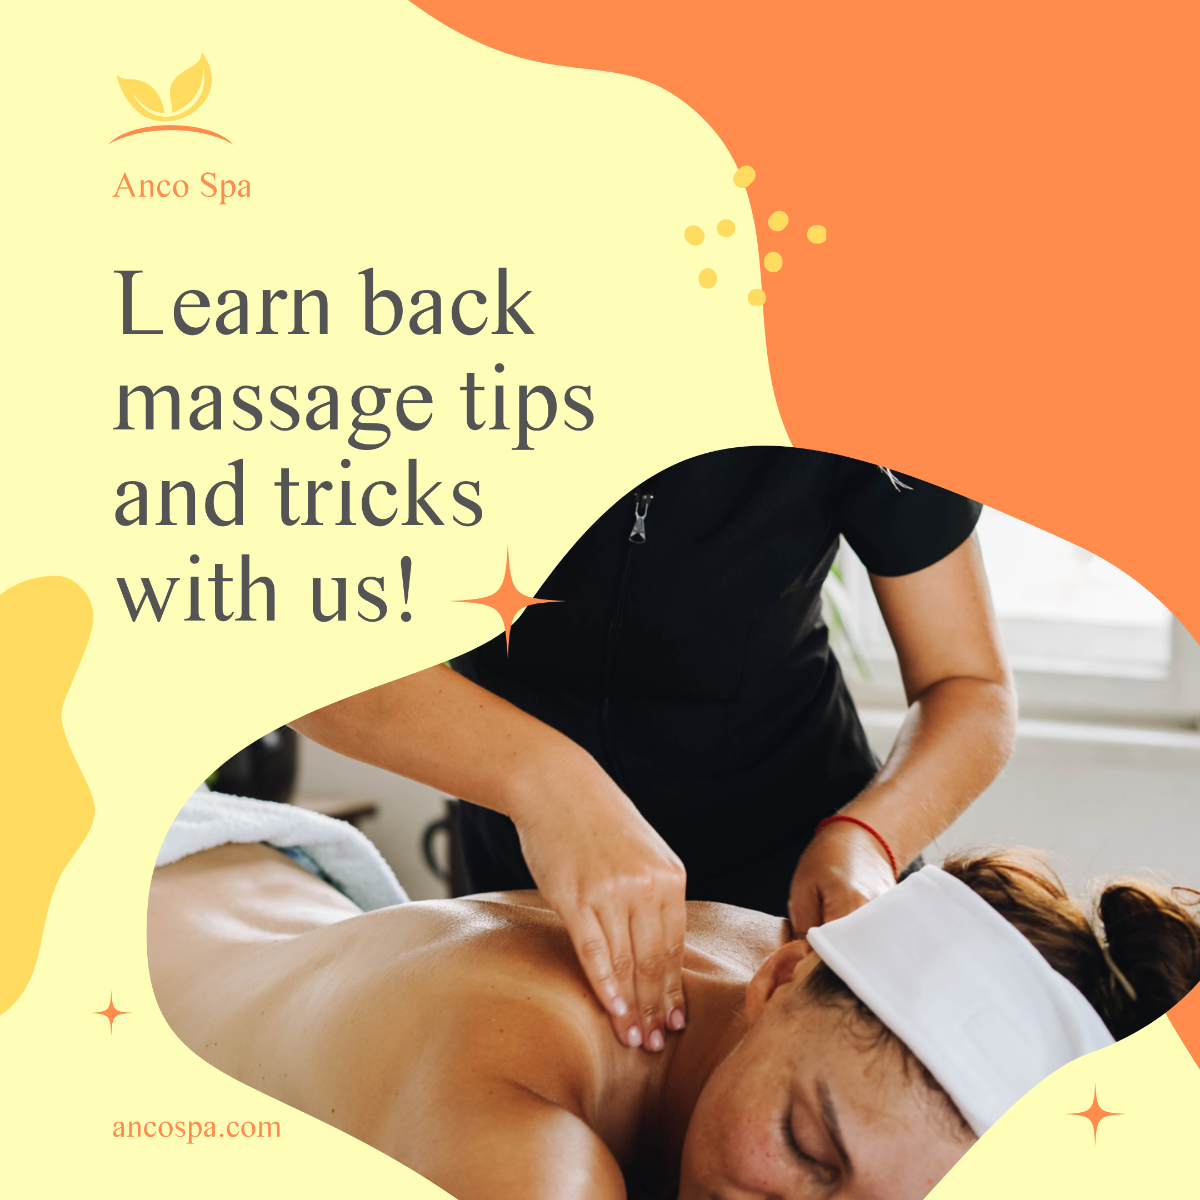 Free Back Massage Tips And Tricks Post, Instagram, Facebook Template